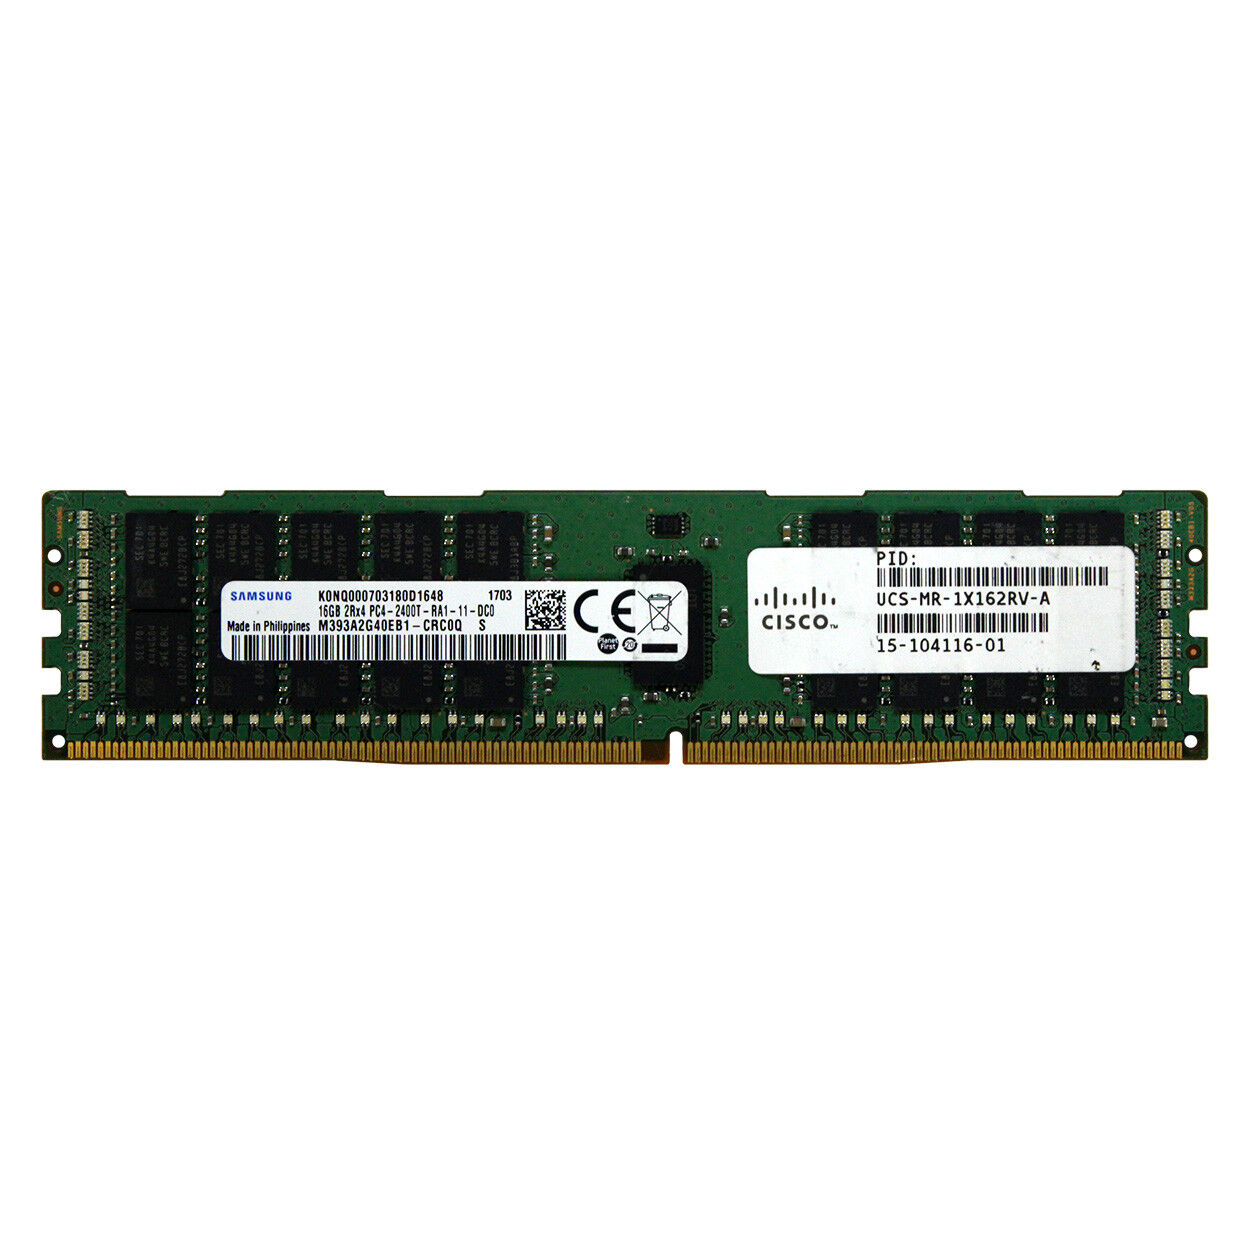 CISCO UCS-MR-1X162RV-A 15-104116-01 16GB 2Rx4 PC4-2400-R REG SERVER MEMORY RAM